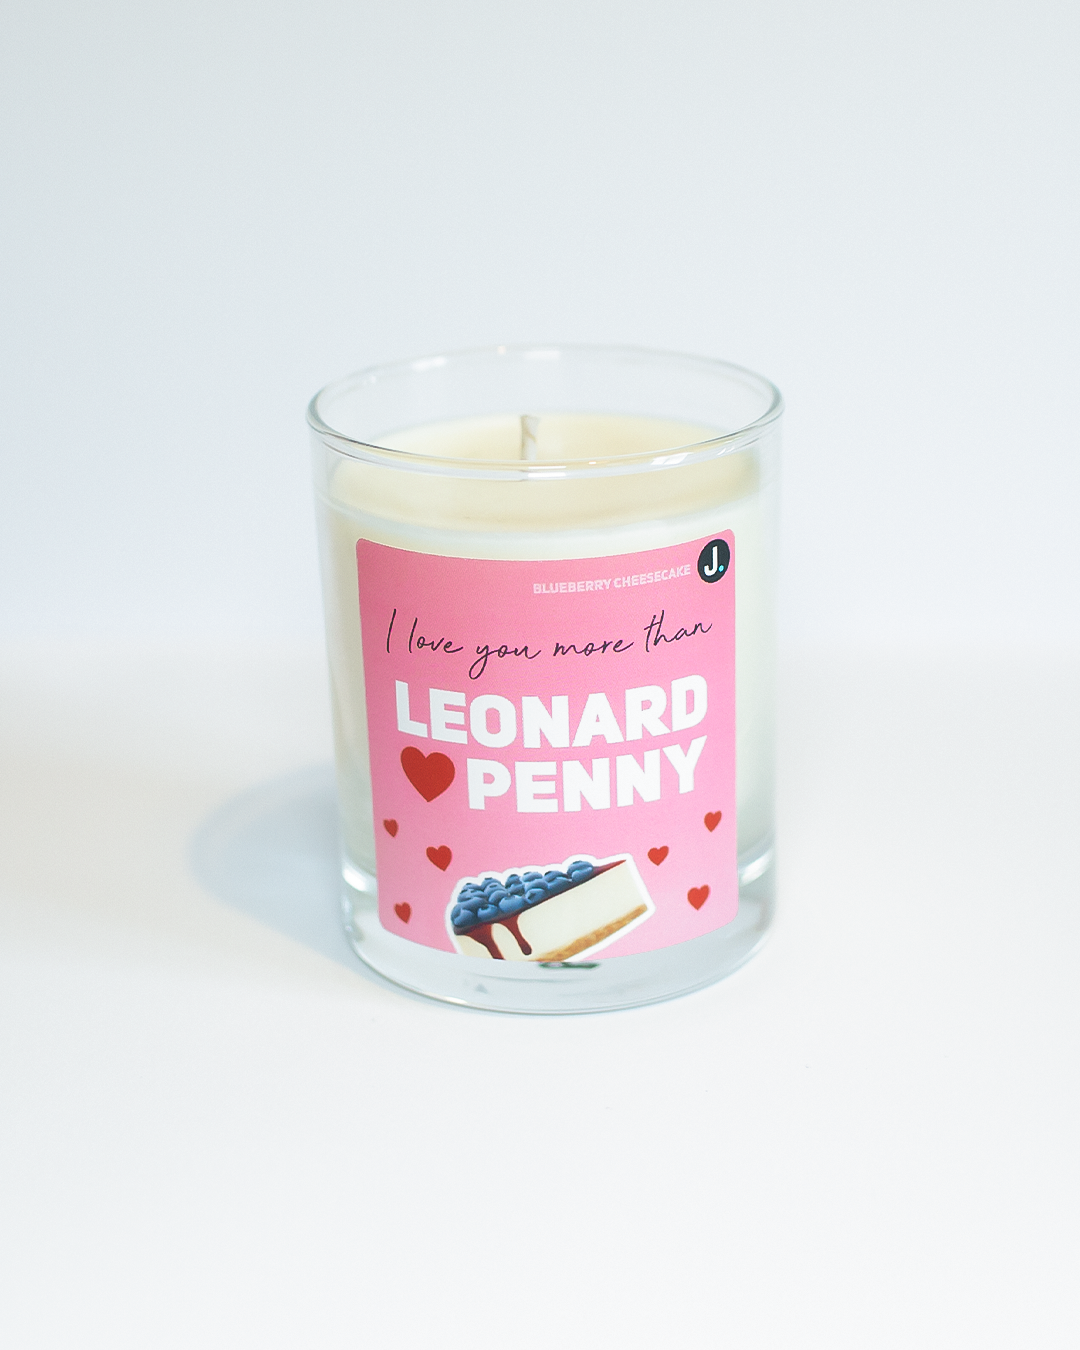 The Big Bang Theory Inspired Candle - Leonard & Penny (Blueberry Cheesecake) The Big Bang Theory Inspired Candle